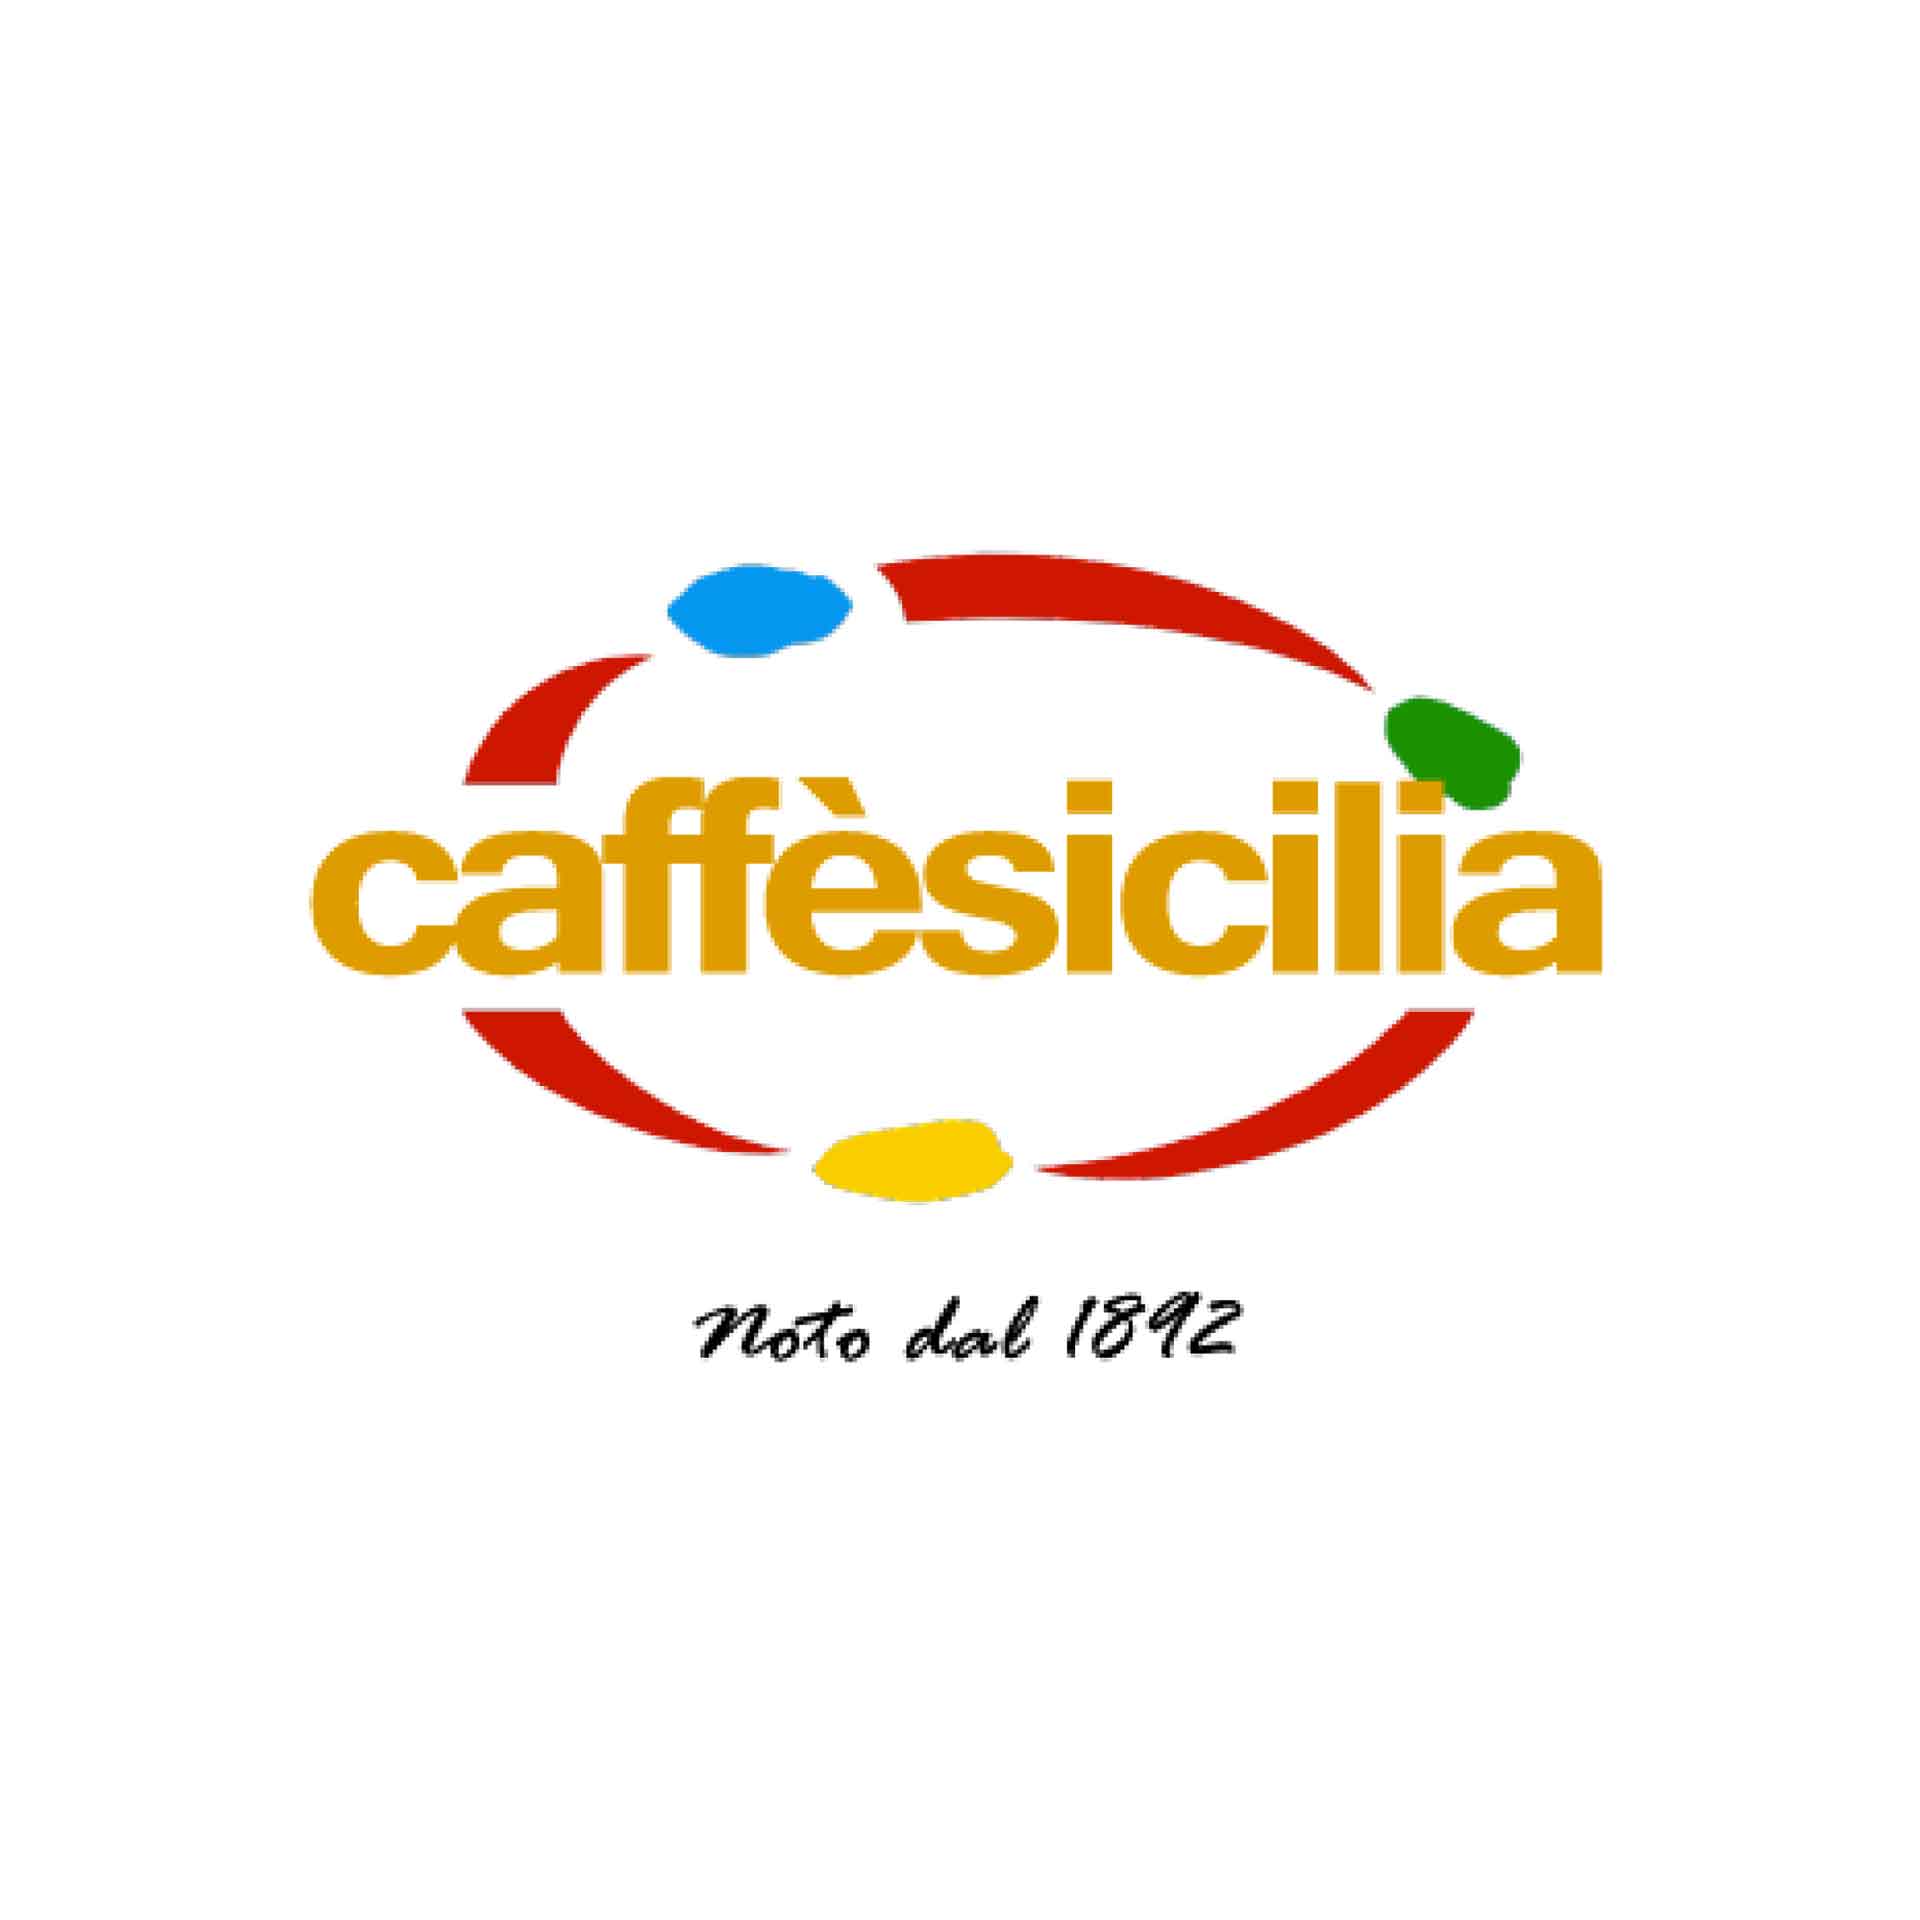 Caffè Sicilia